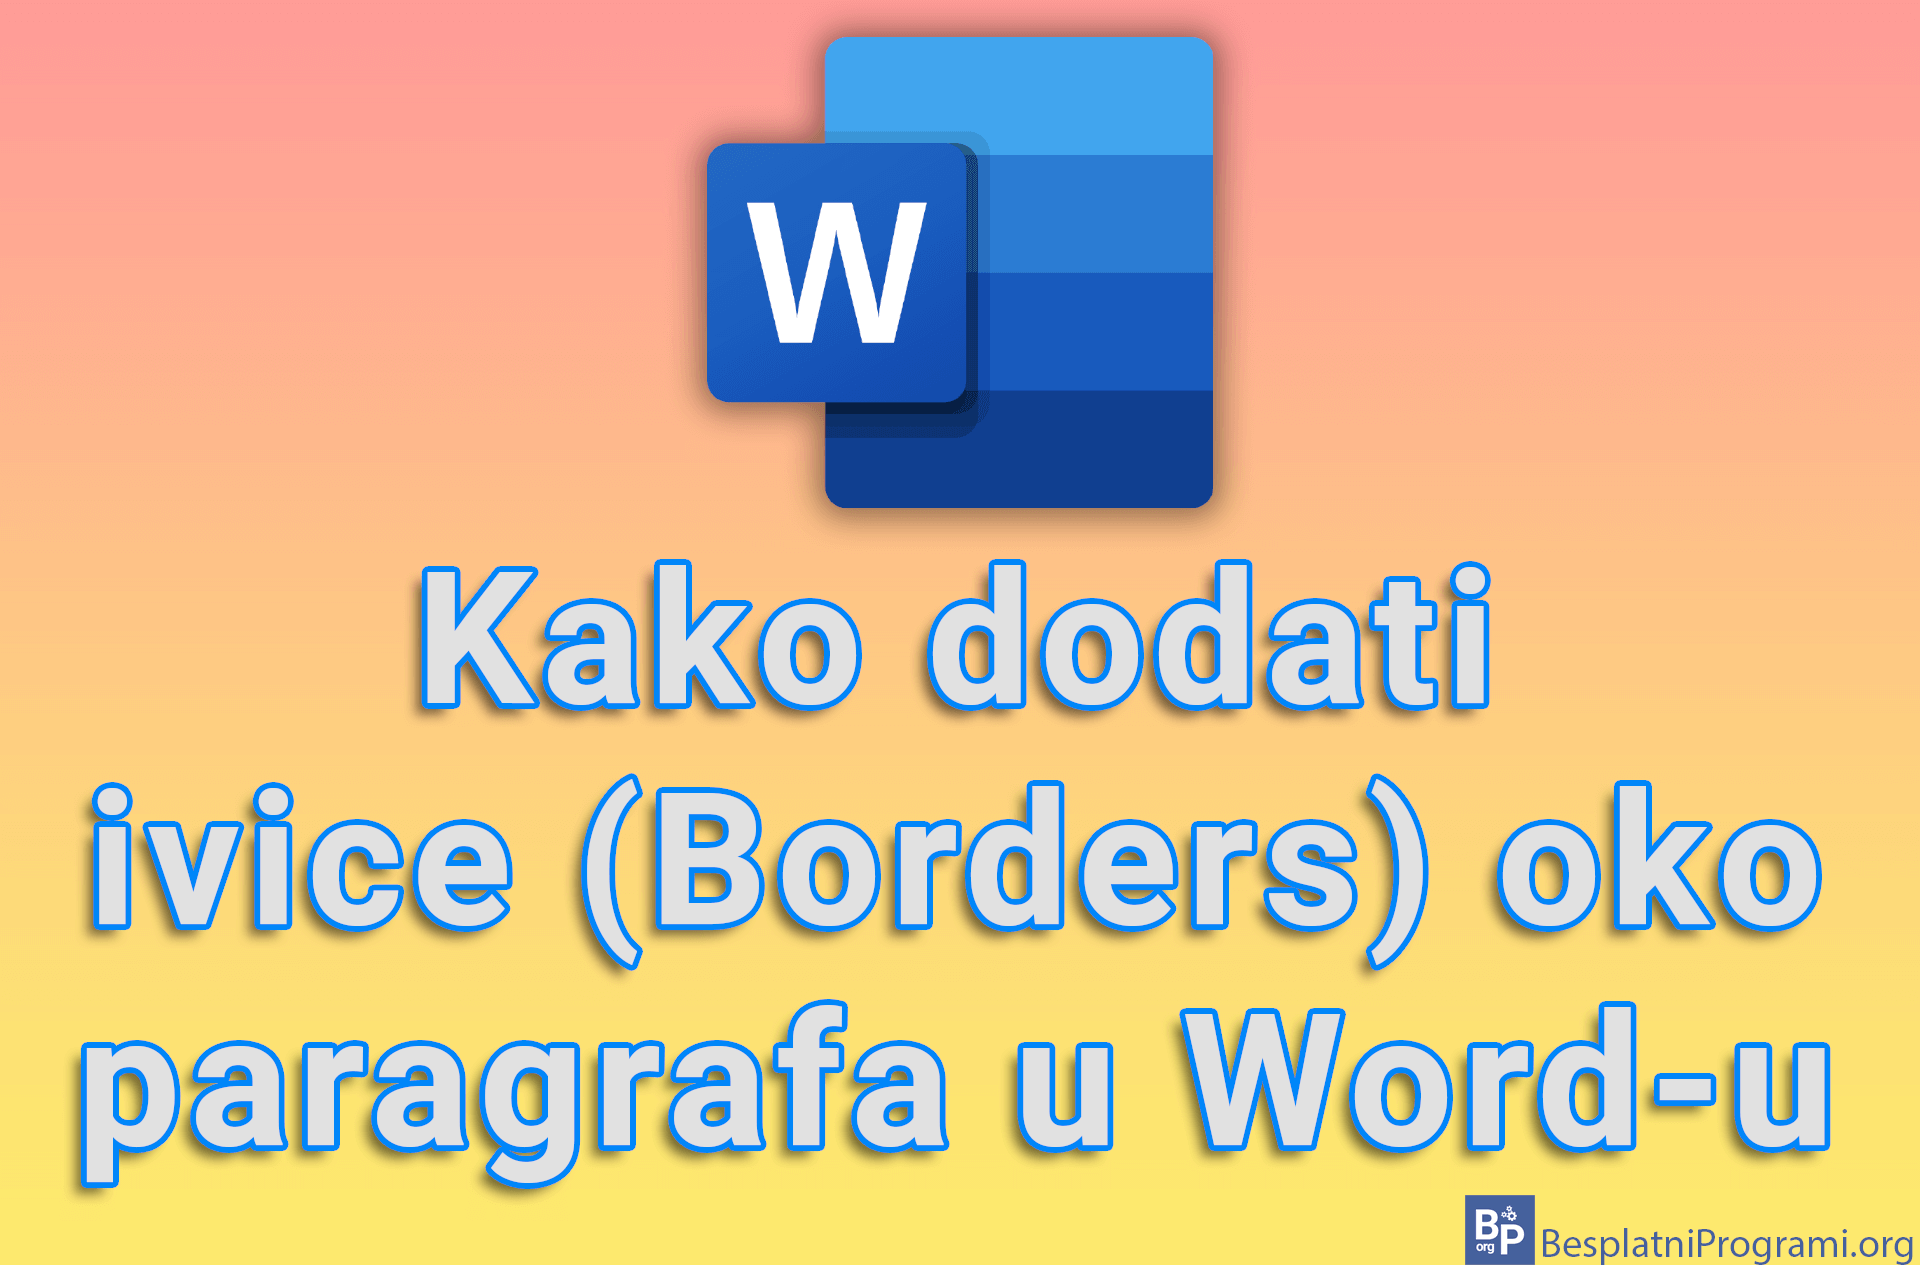 Kako dodati ivice (Borders) oko paragrafa u Word-u